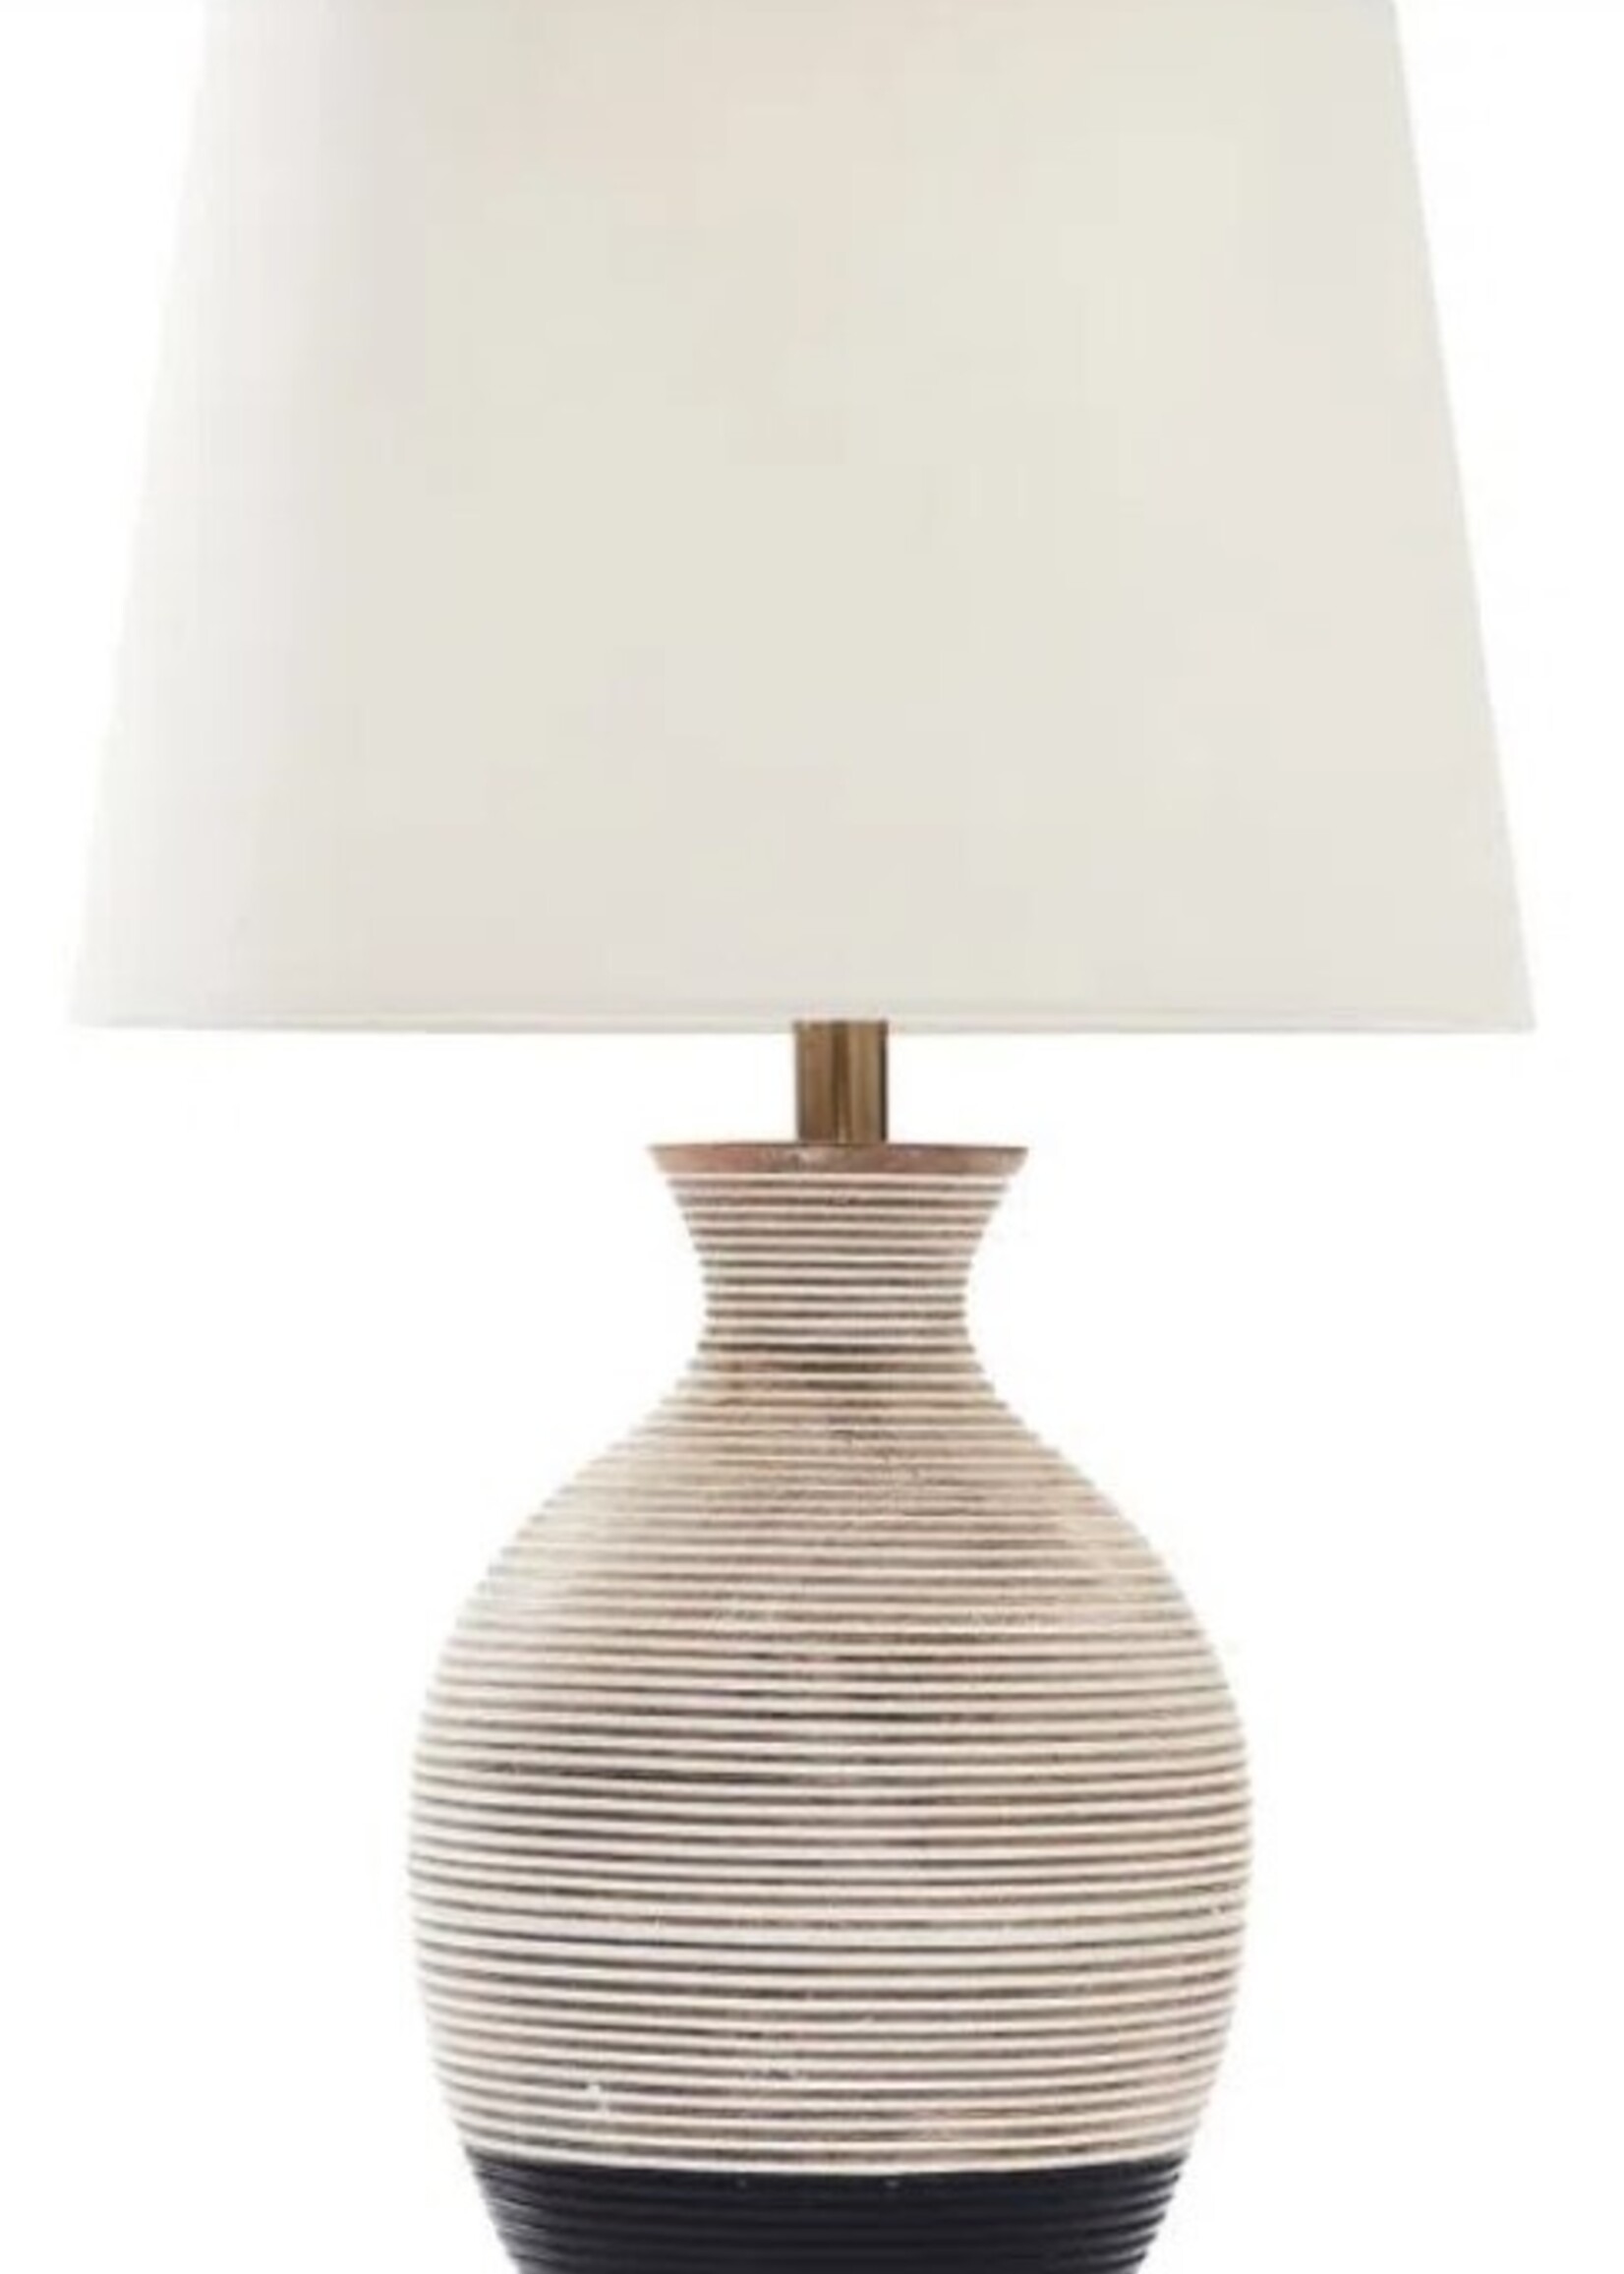 Renwil Ignacio Table Lamp